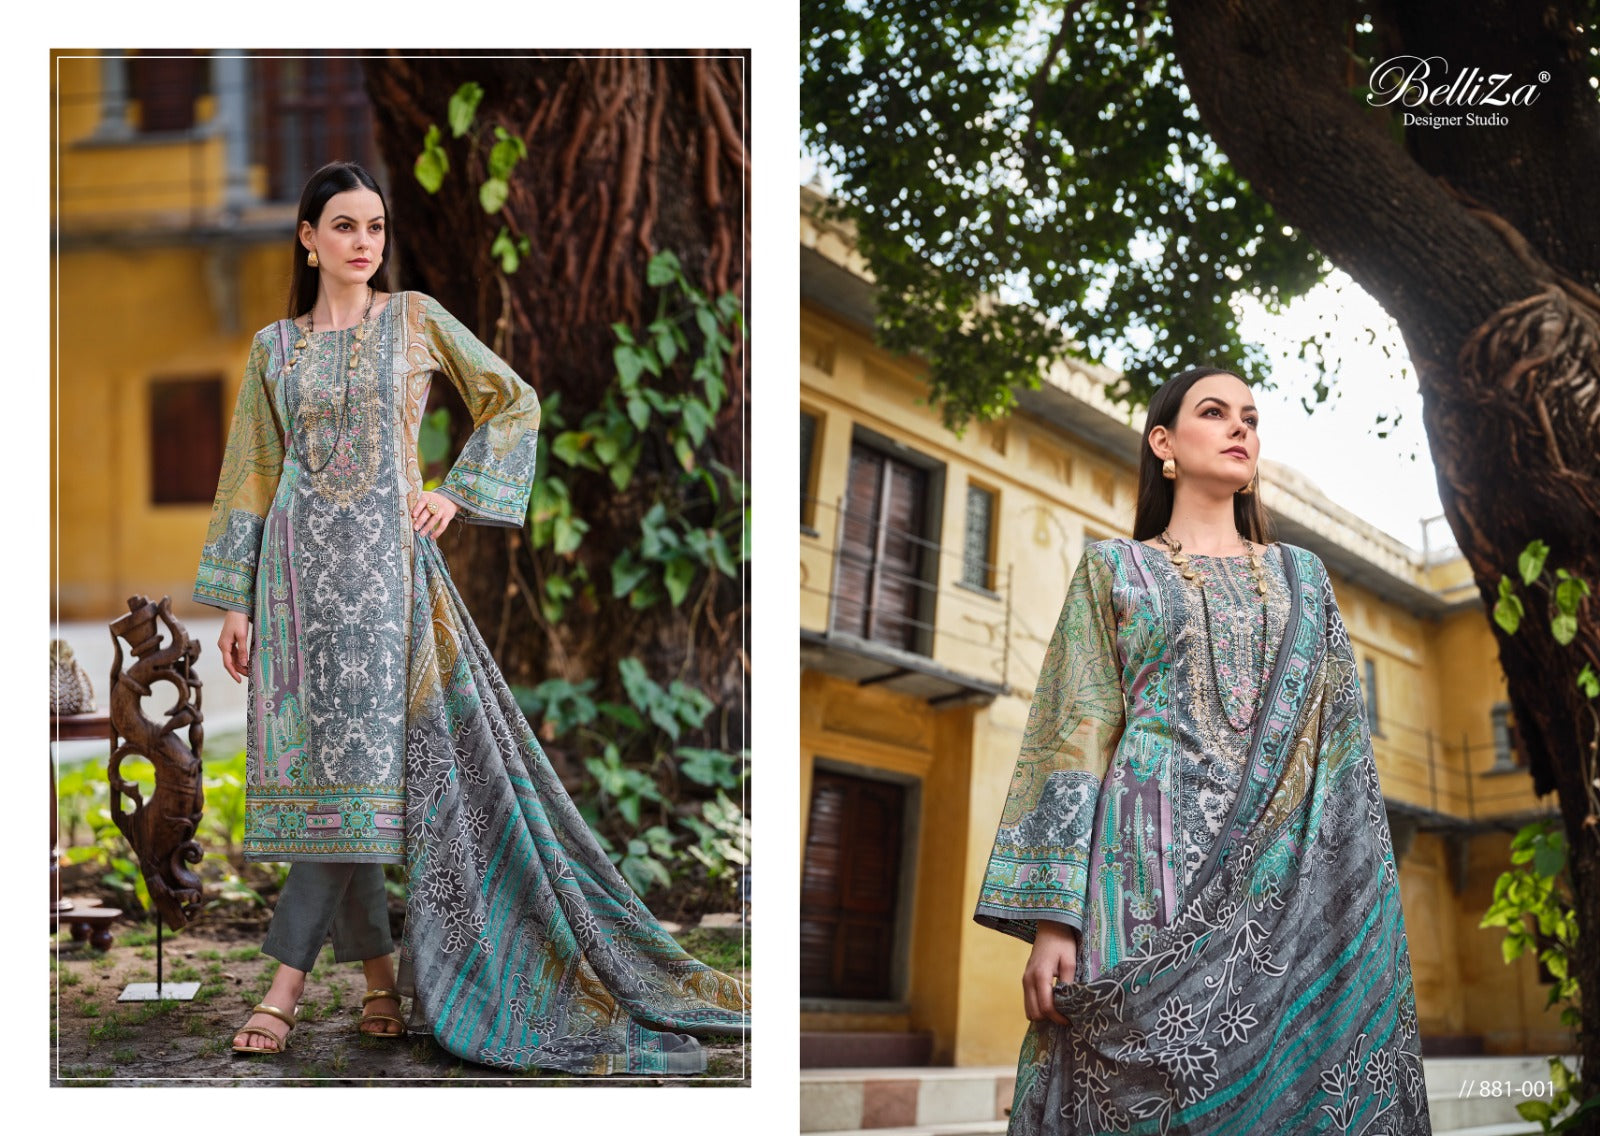 Belliza Designer Studio Naira Vol 35 Cotton With Embroidery Work Salwar Kameez Wholesale Supplier